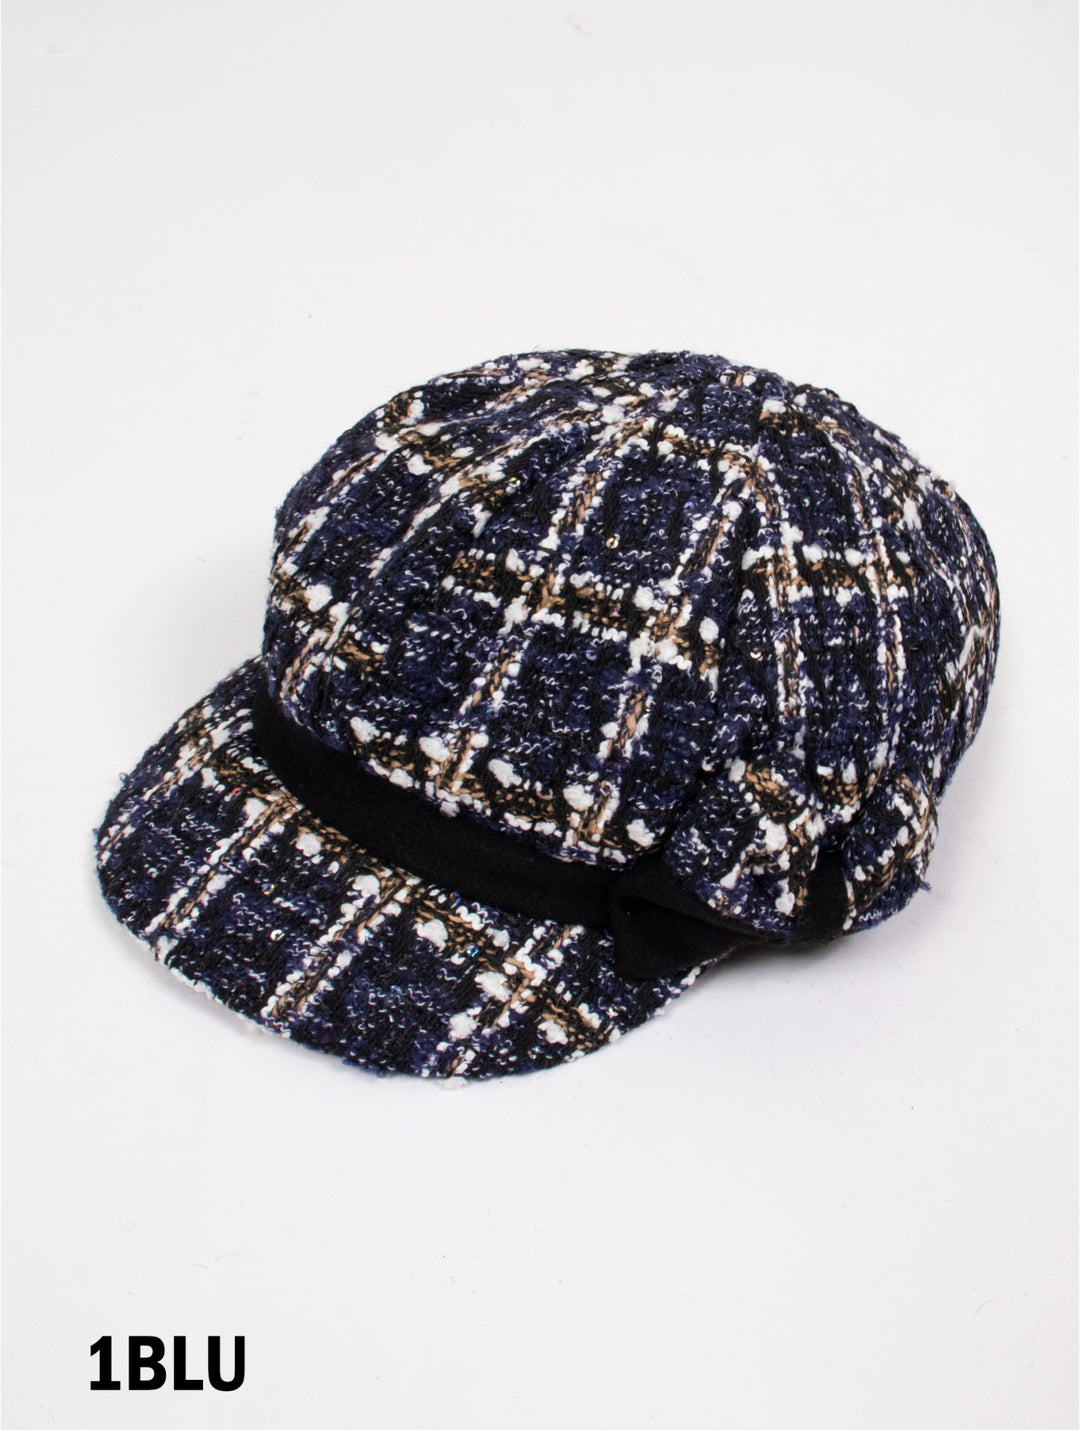 Winter Vintage Plaid Patterned Hat w/ Side Bow